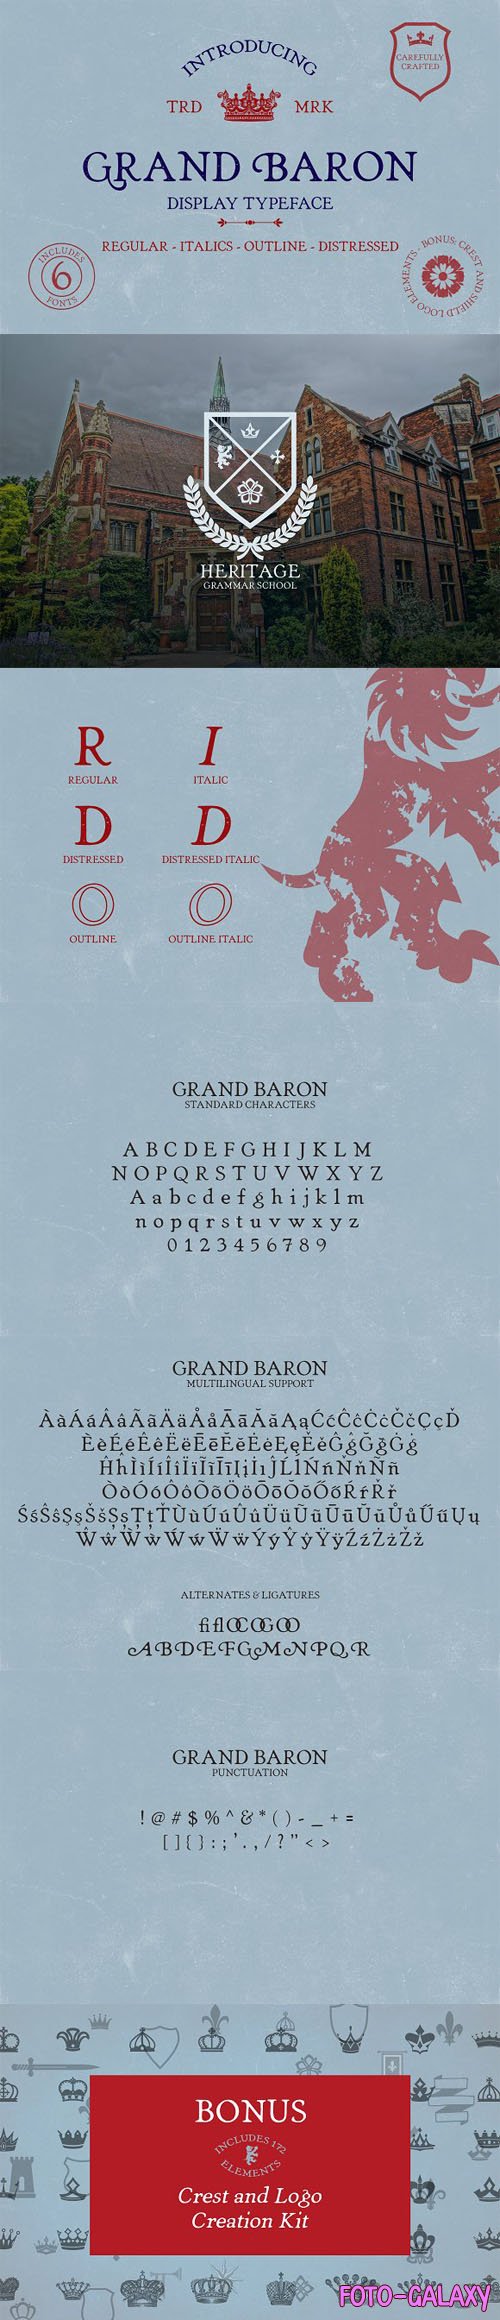 Grand Baron Typeface